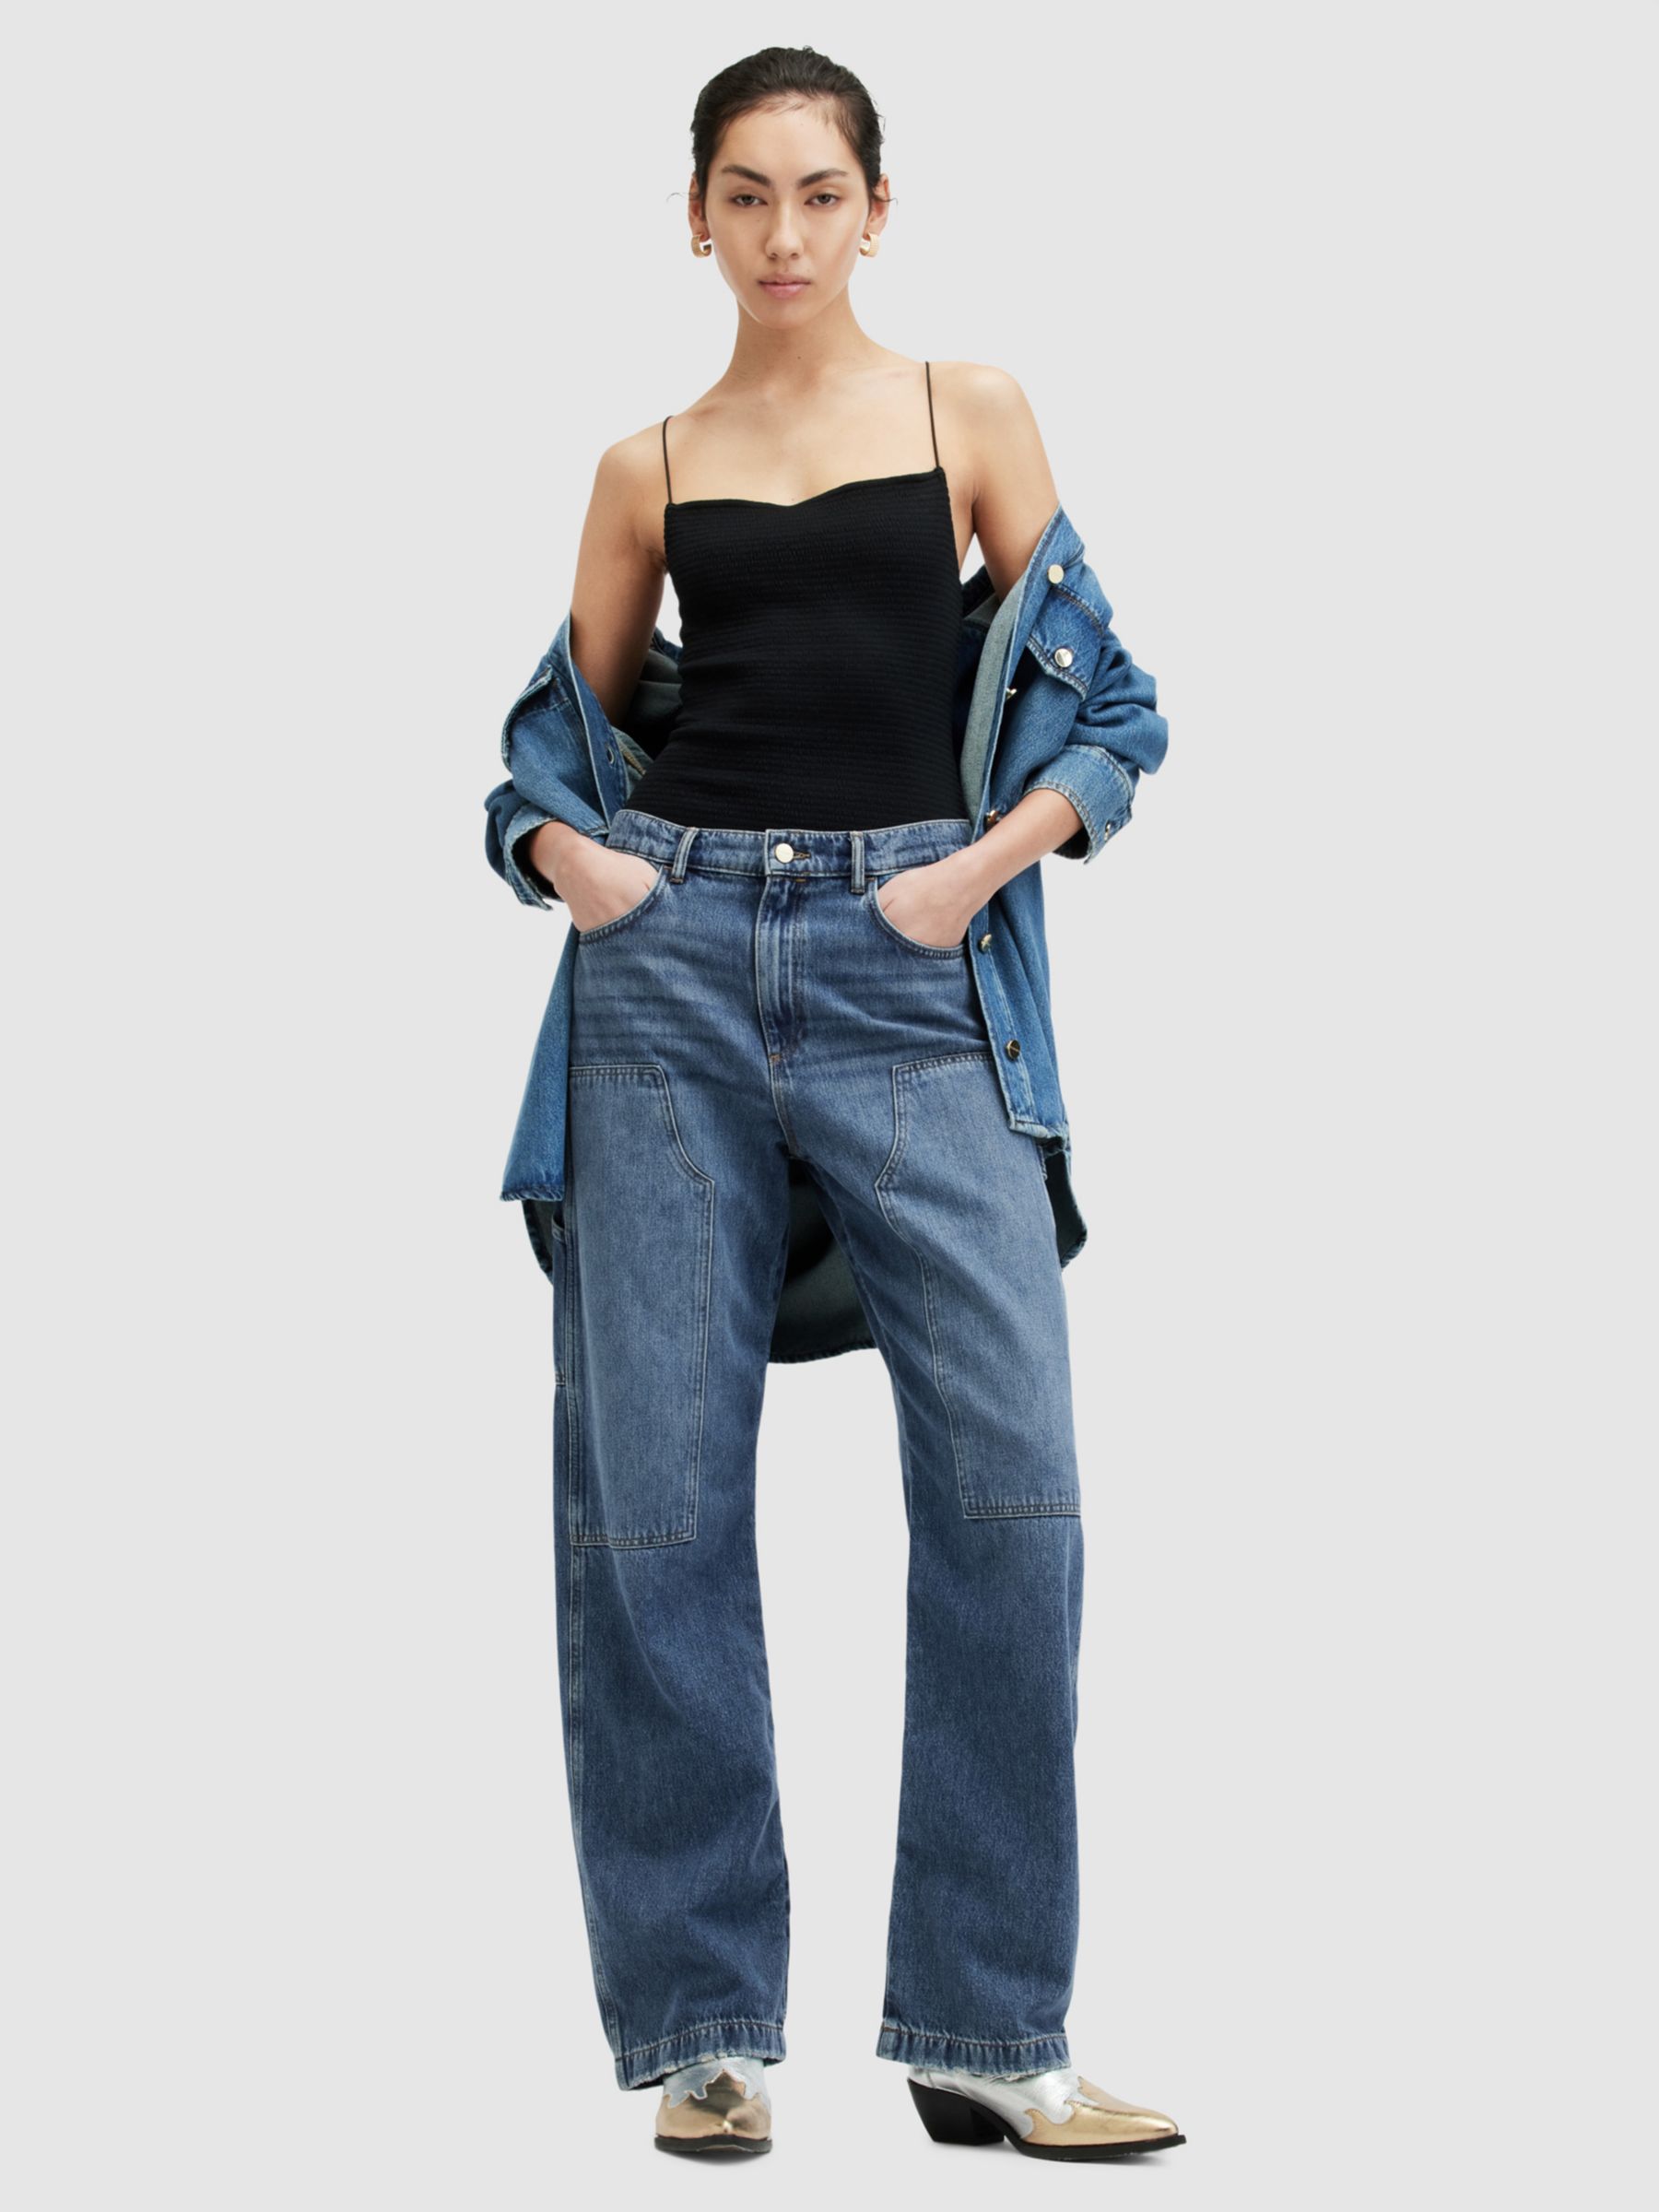 AllSaints Mia Carpenter Wide Leg Denim Jeans, Mid Indigo, 27